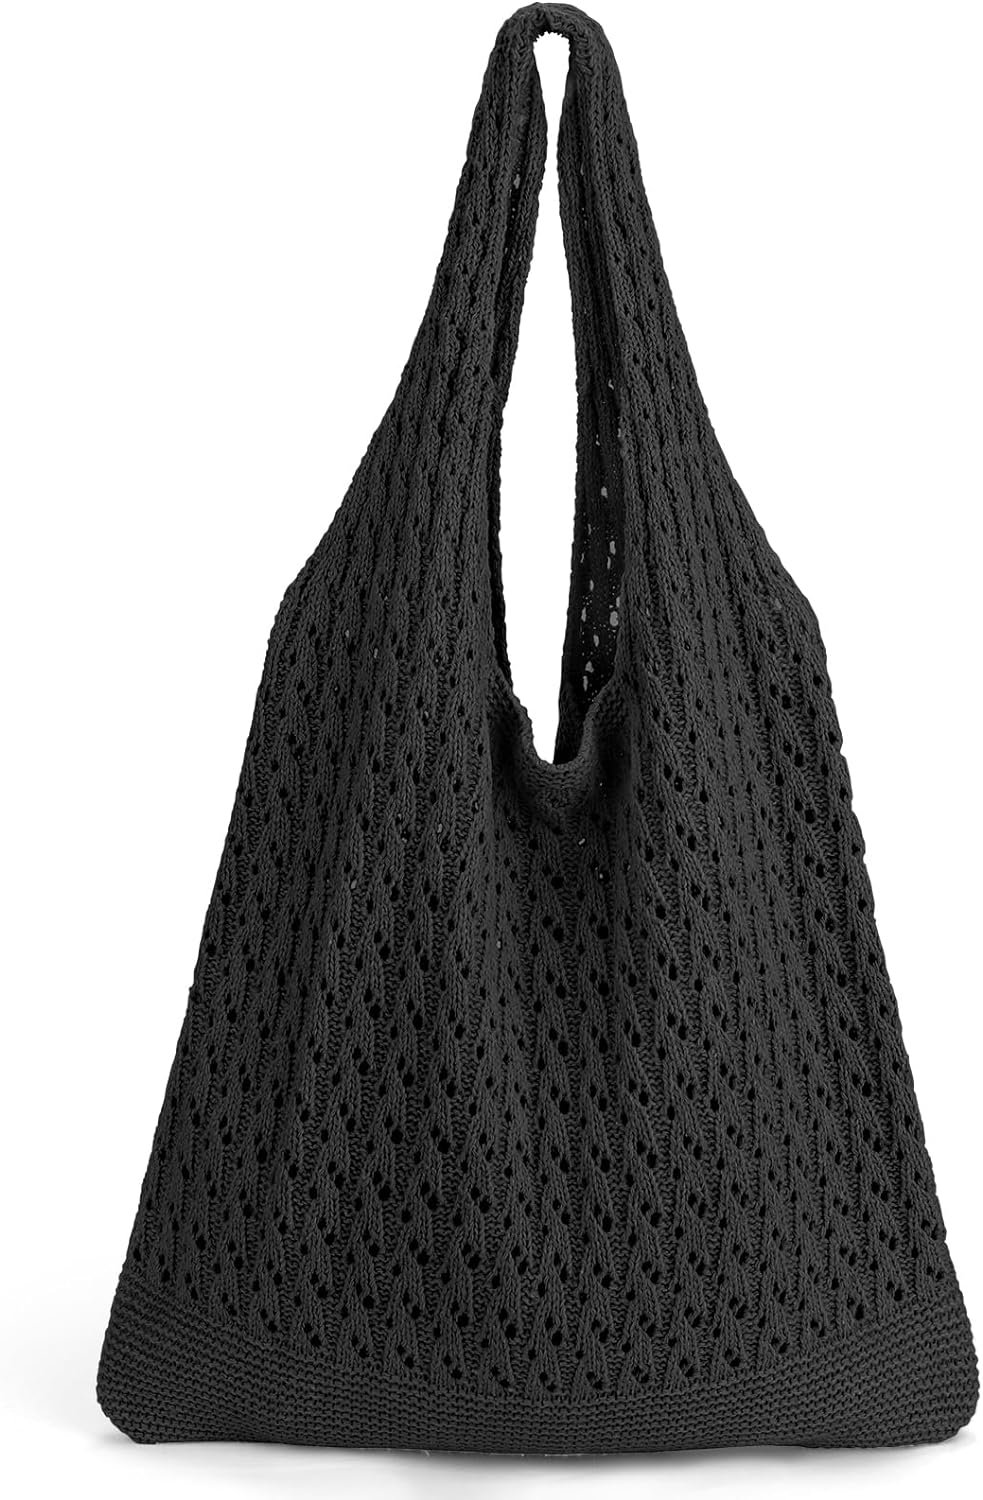 hatisan Crochet Bags for Women Summer Beach Tote Bag Aesthetic Tote Bag Hippie Bag Knit Bag